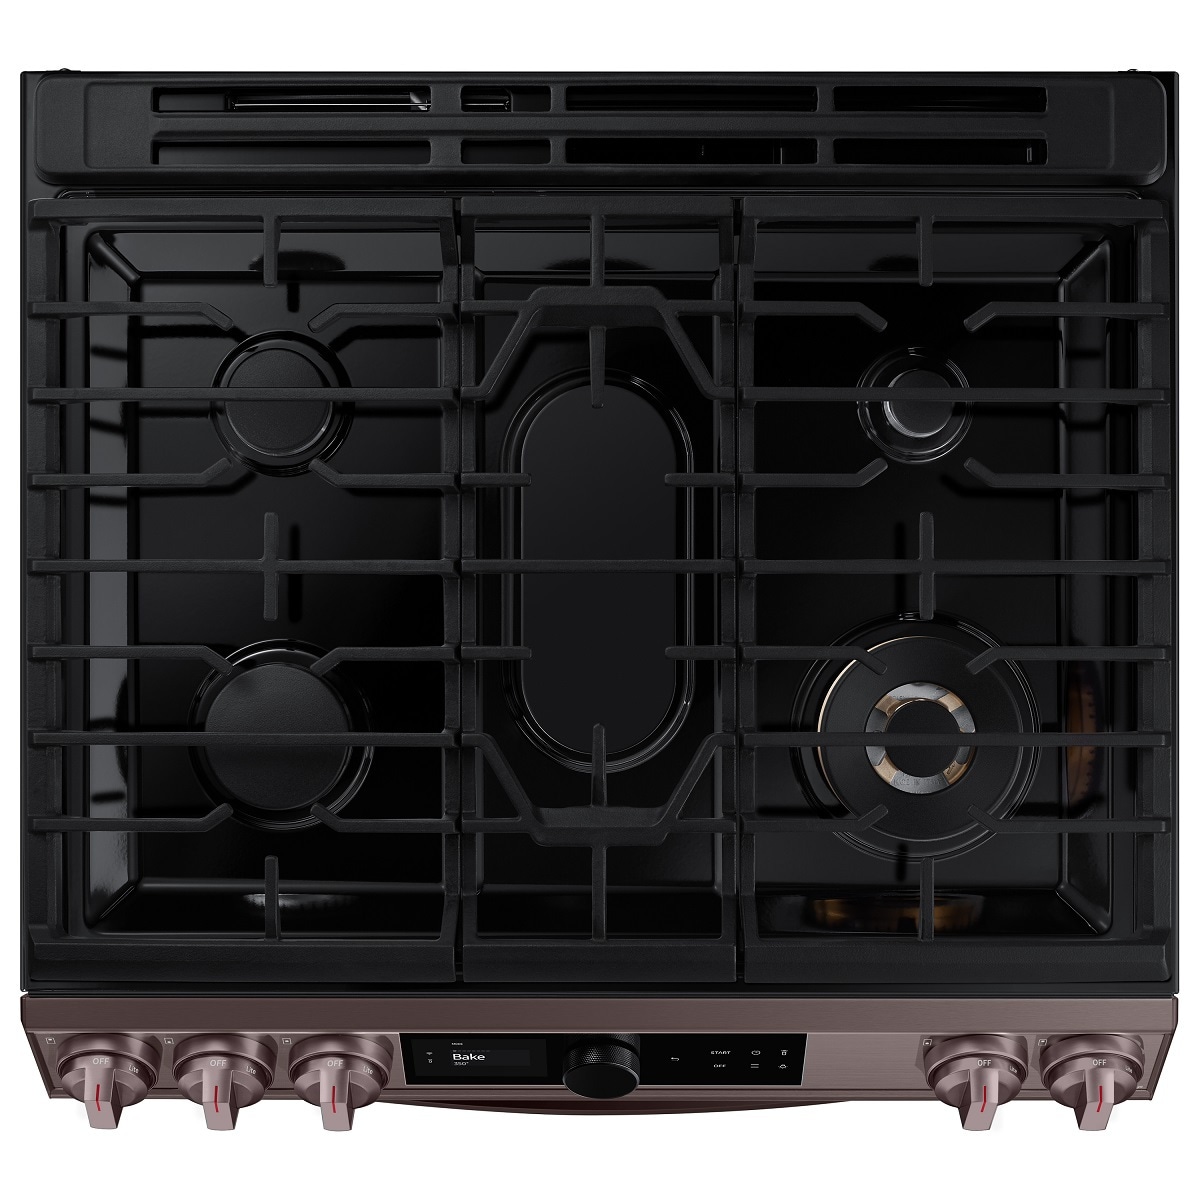  American Range A11130 Thermostat, Gas Oven, Af45Lb